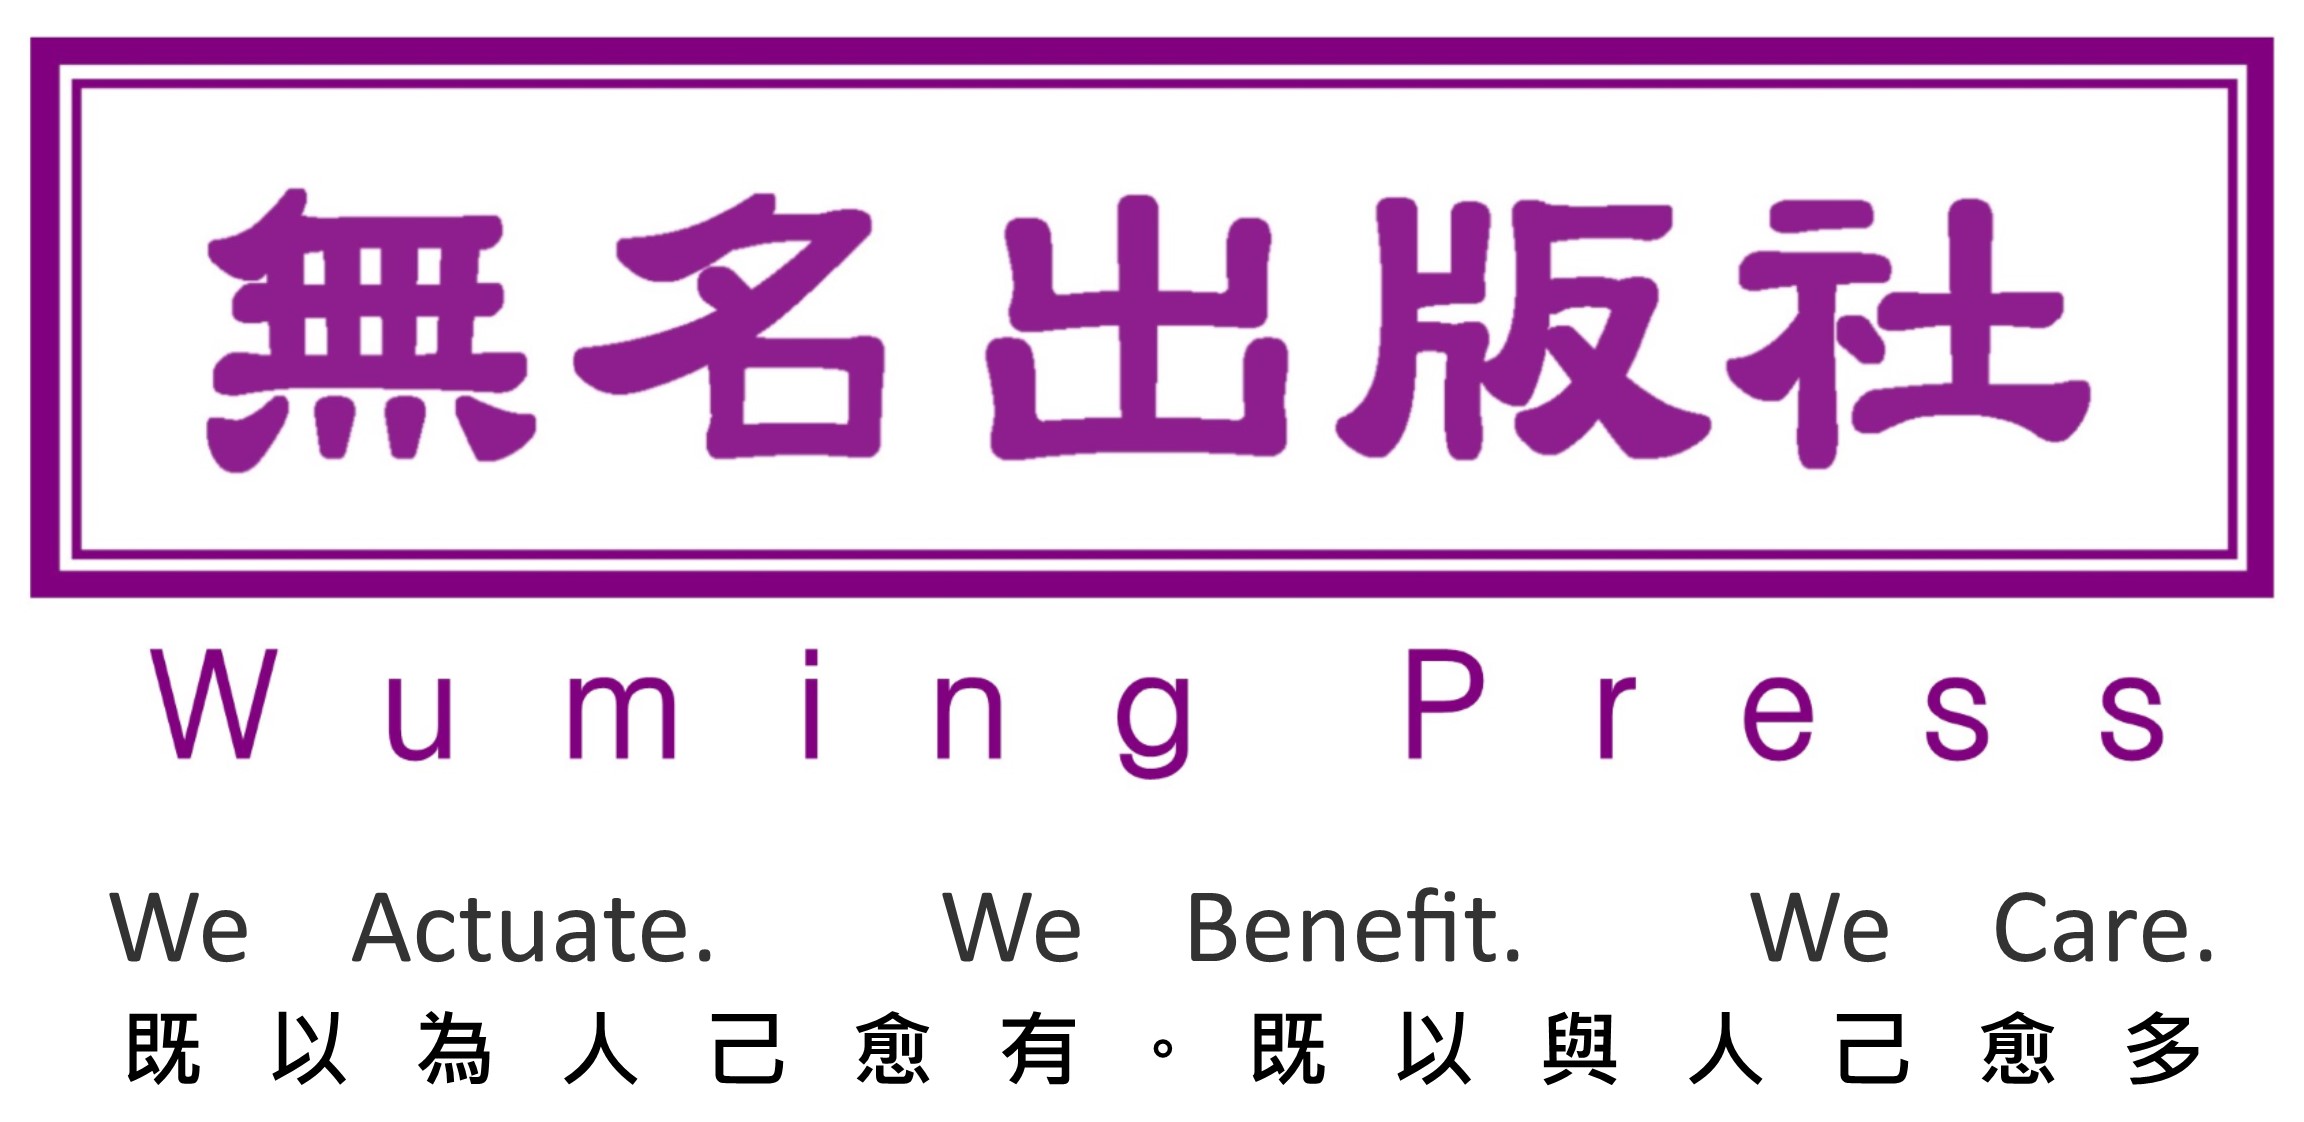 Wuming Press